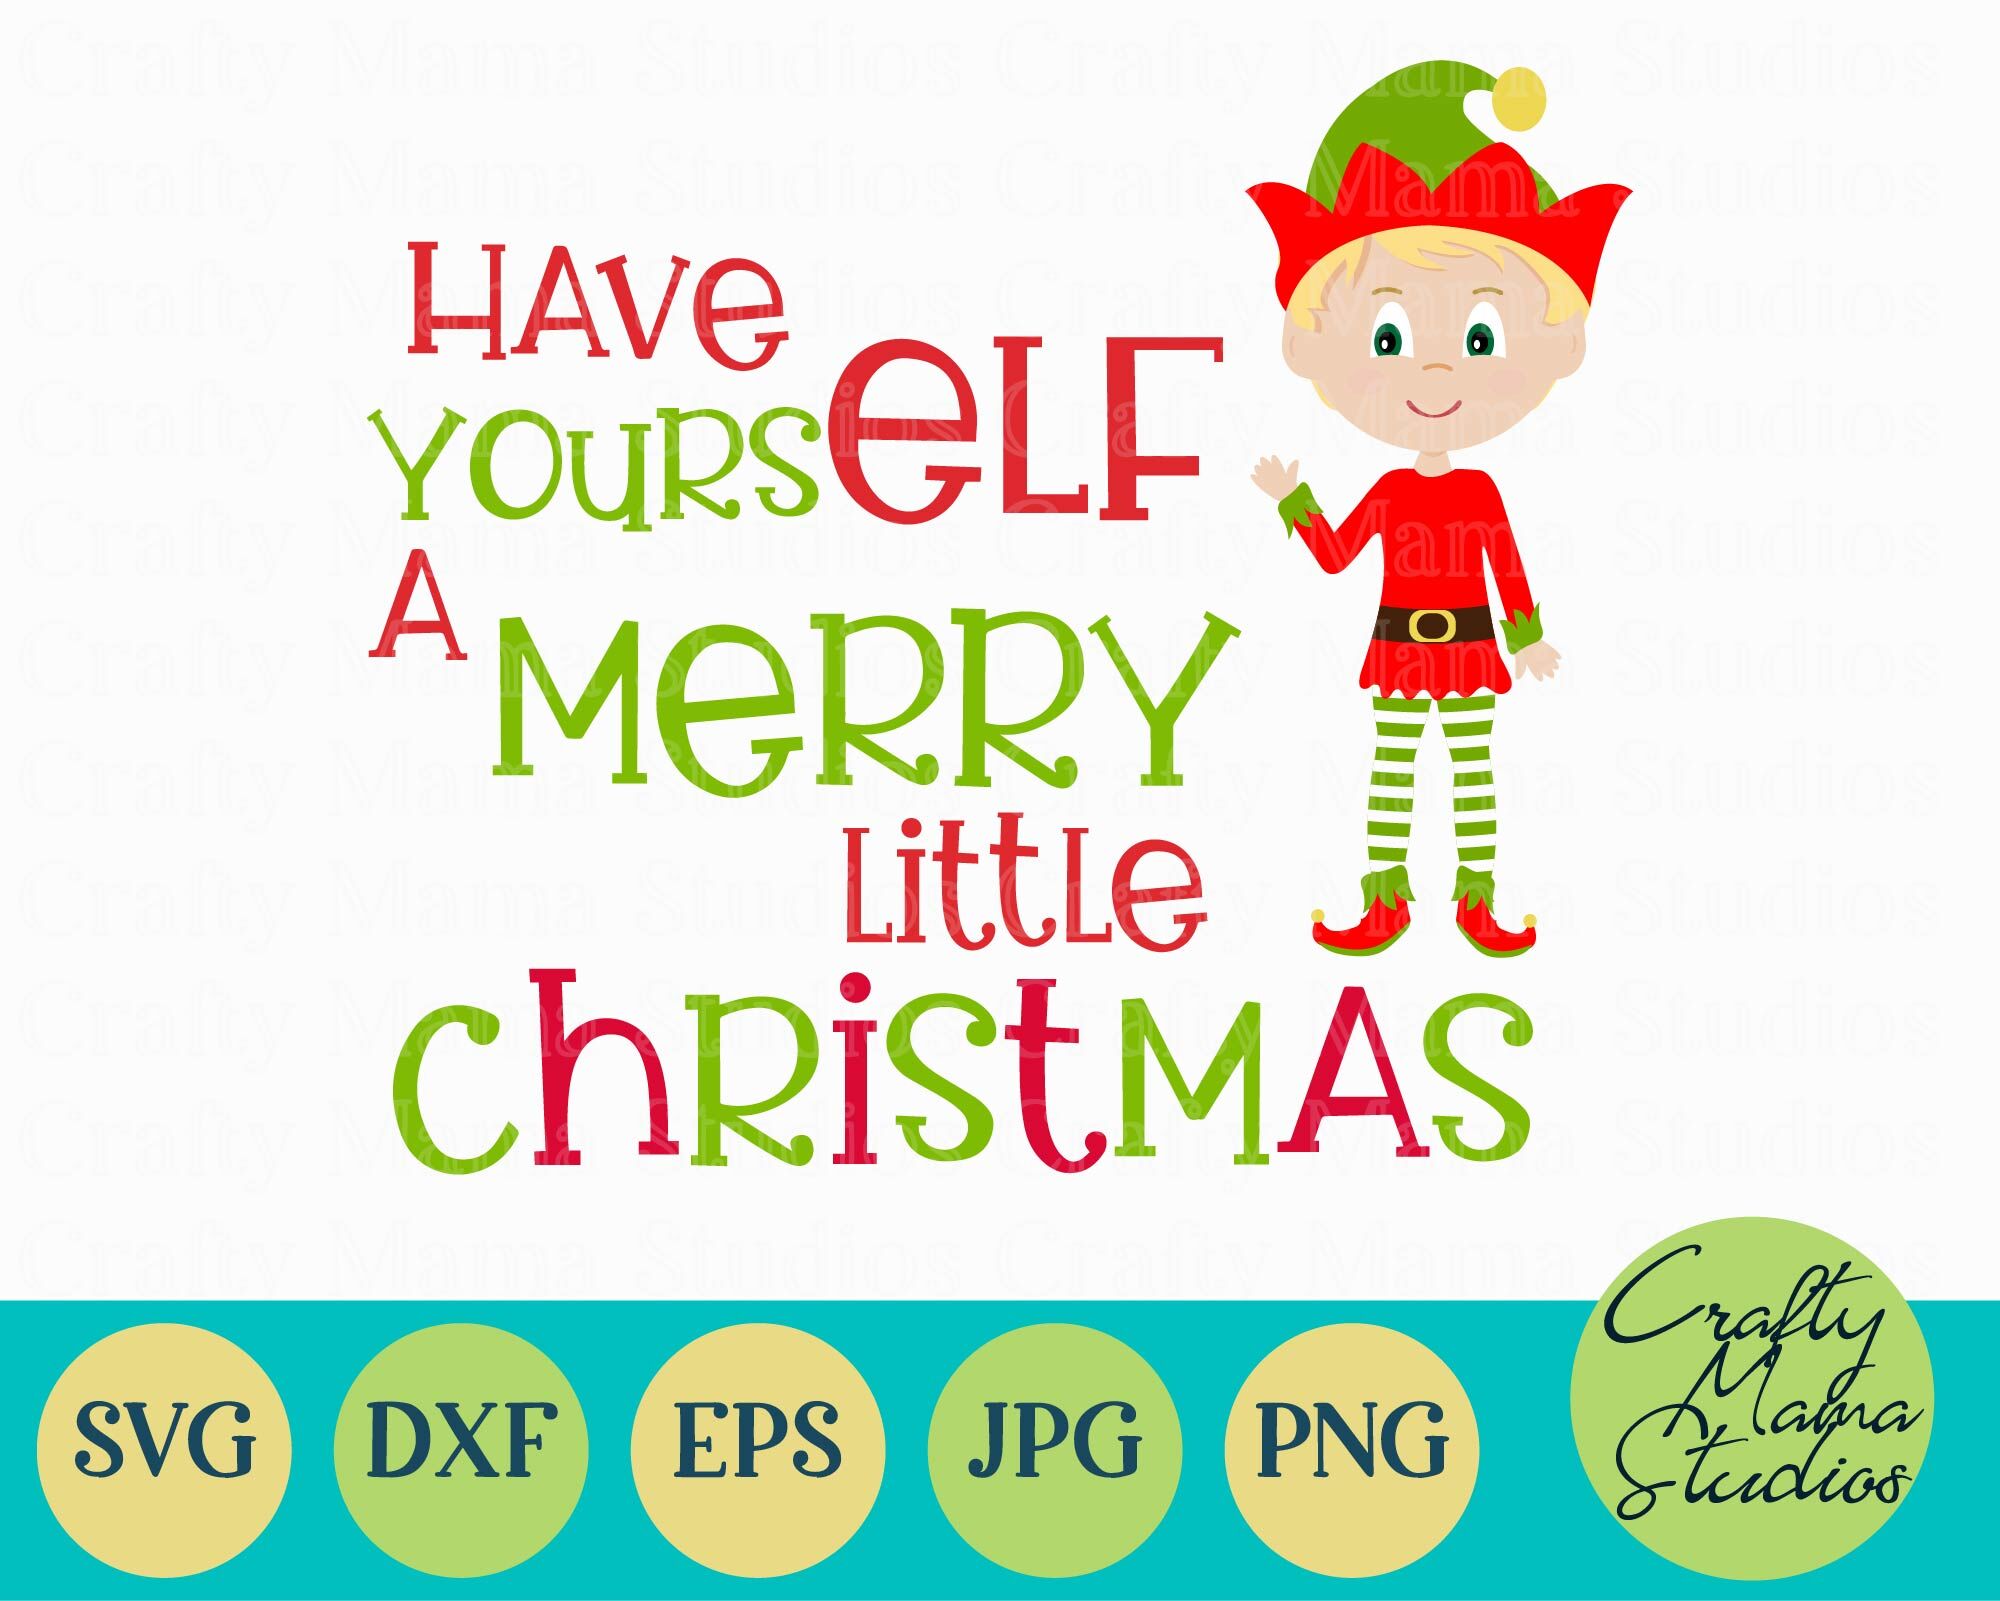 Download Merry Little Christmas Svg Christmas Elf Svg By Crafty Mama Studios Thehungryjpeg Com